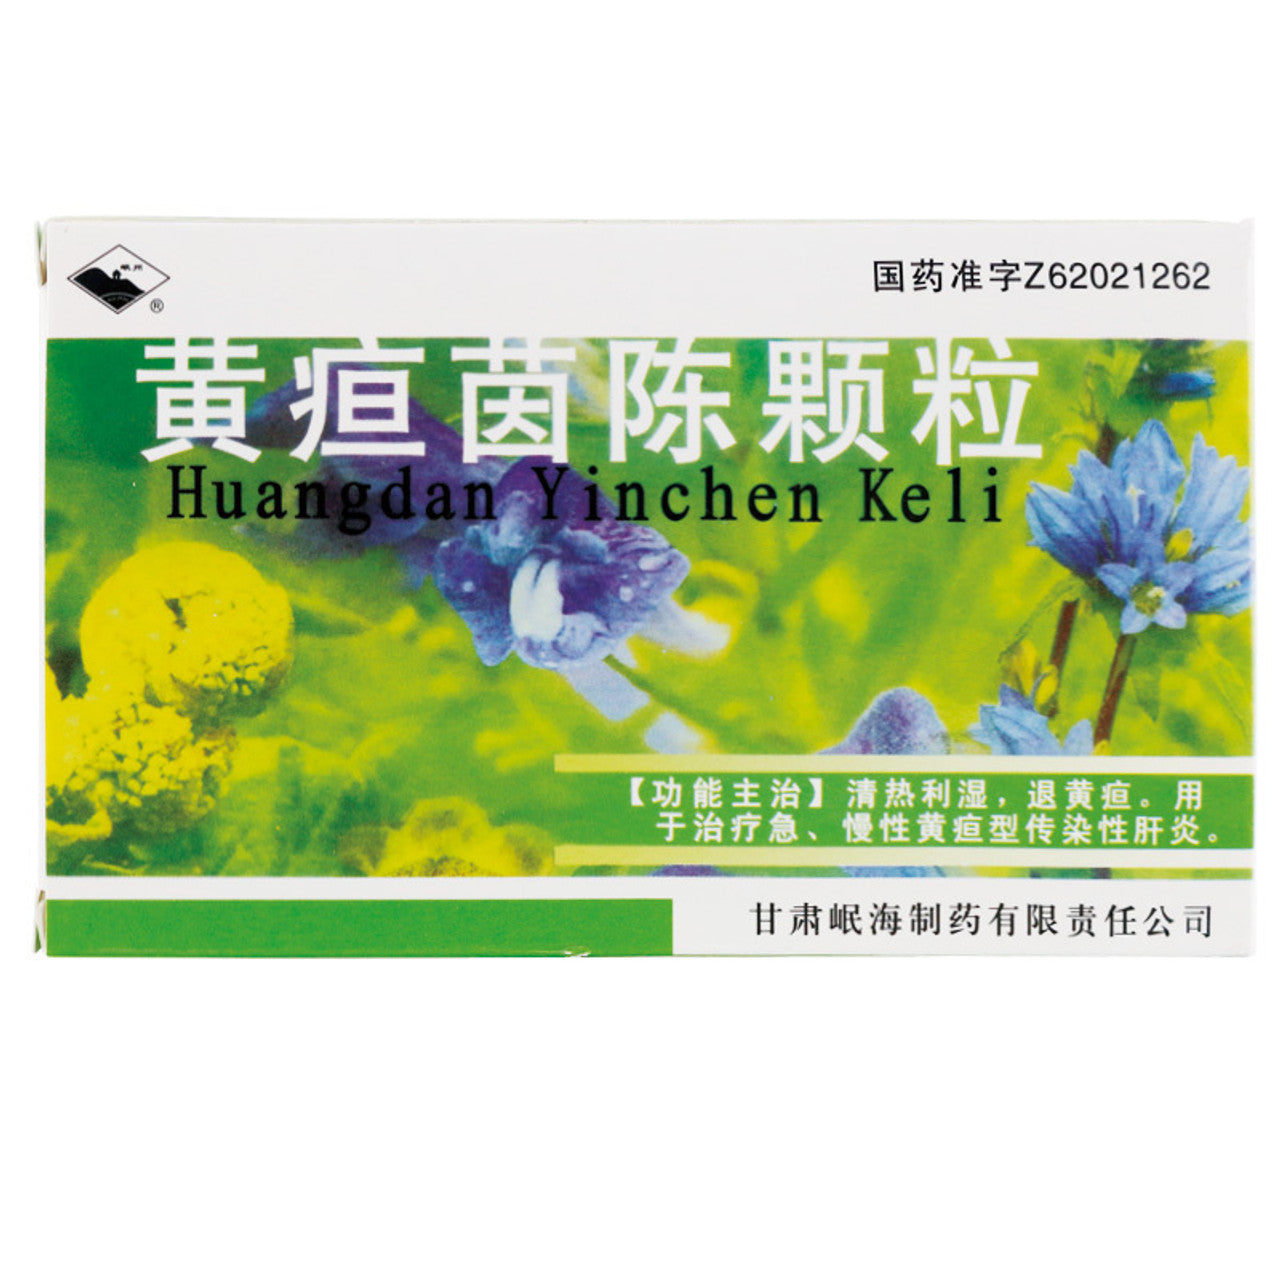 China Herb. Brand Minzhou. Huangdan Yinchen Keli or Huang Dan Yin Chen Ke Li or Huangdan Yinchen Granules for acute and chronic jaundice infectious hepatitis.